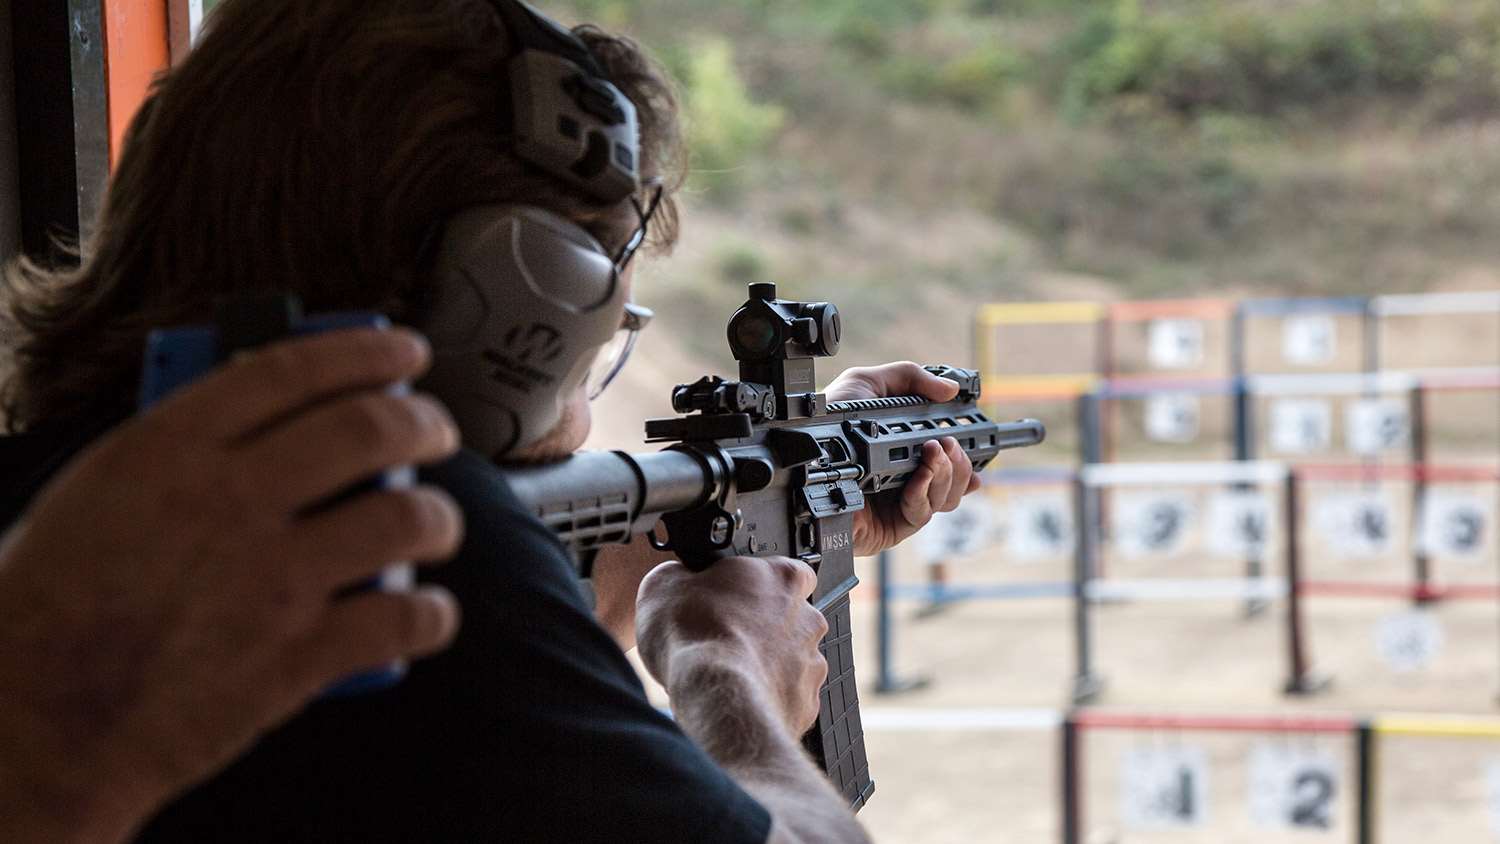 David Herman shooting Metal Madness at the 2019 NRA World Shooting Championship